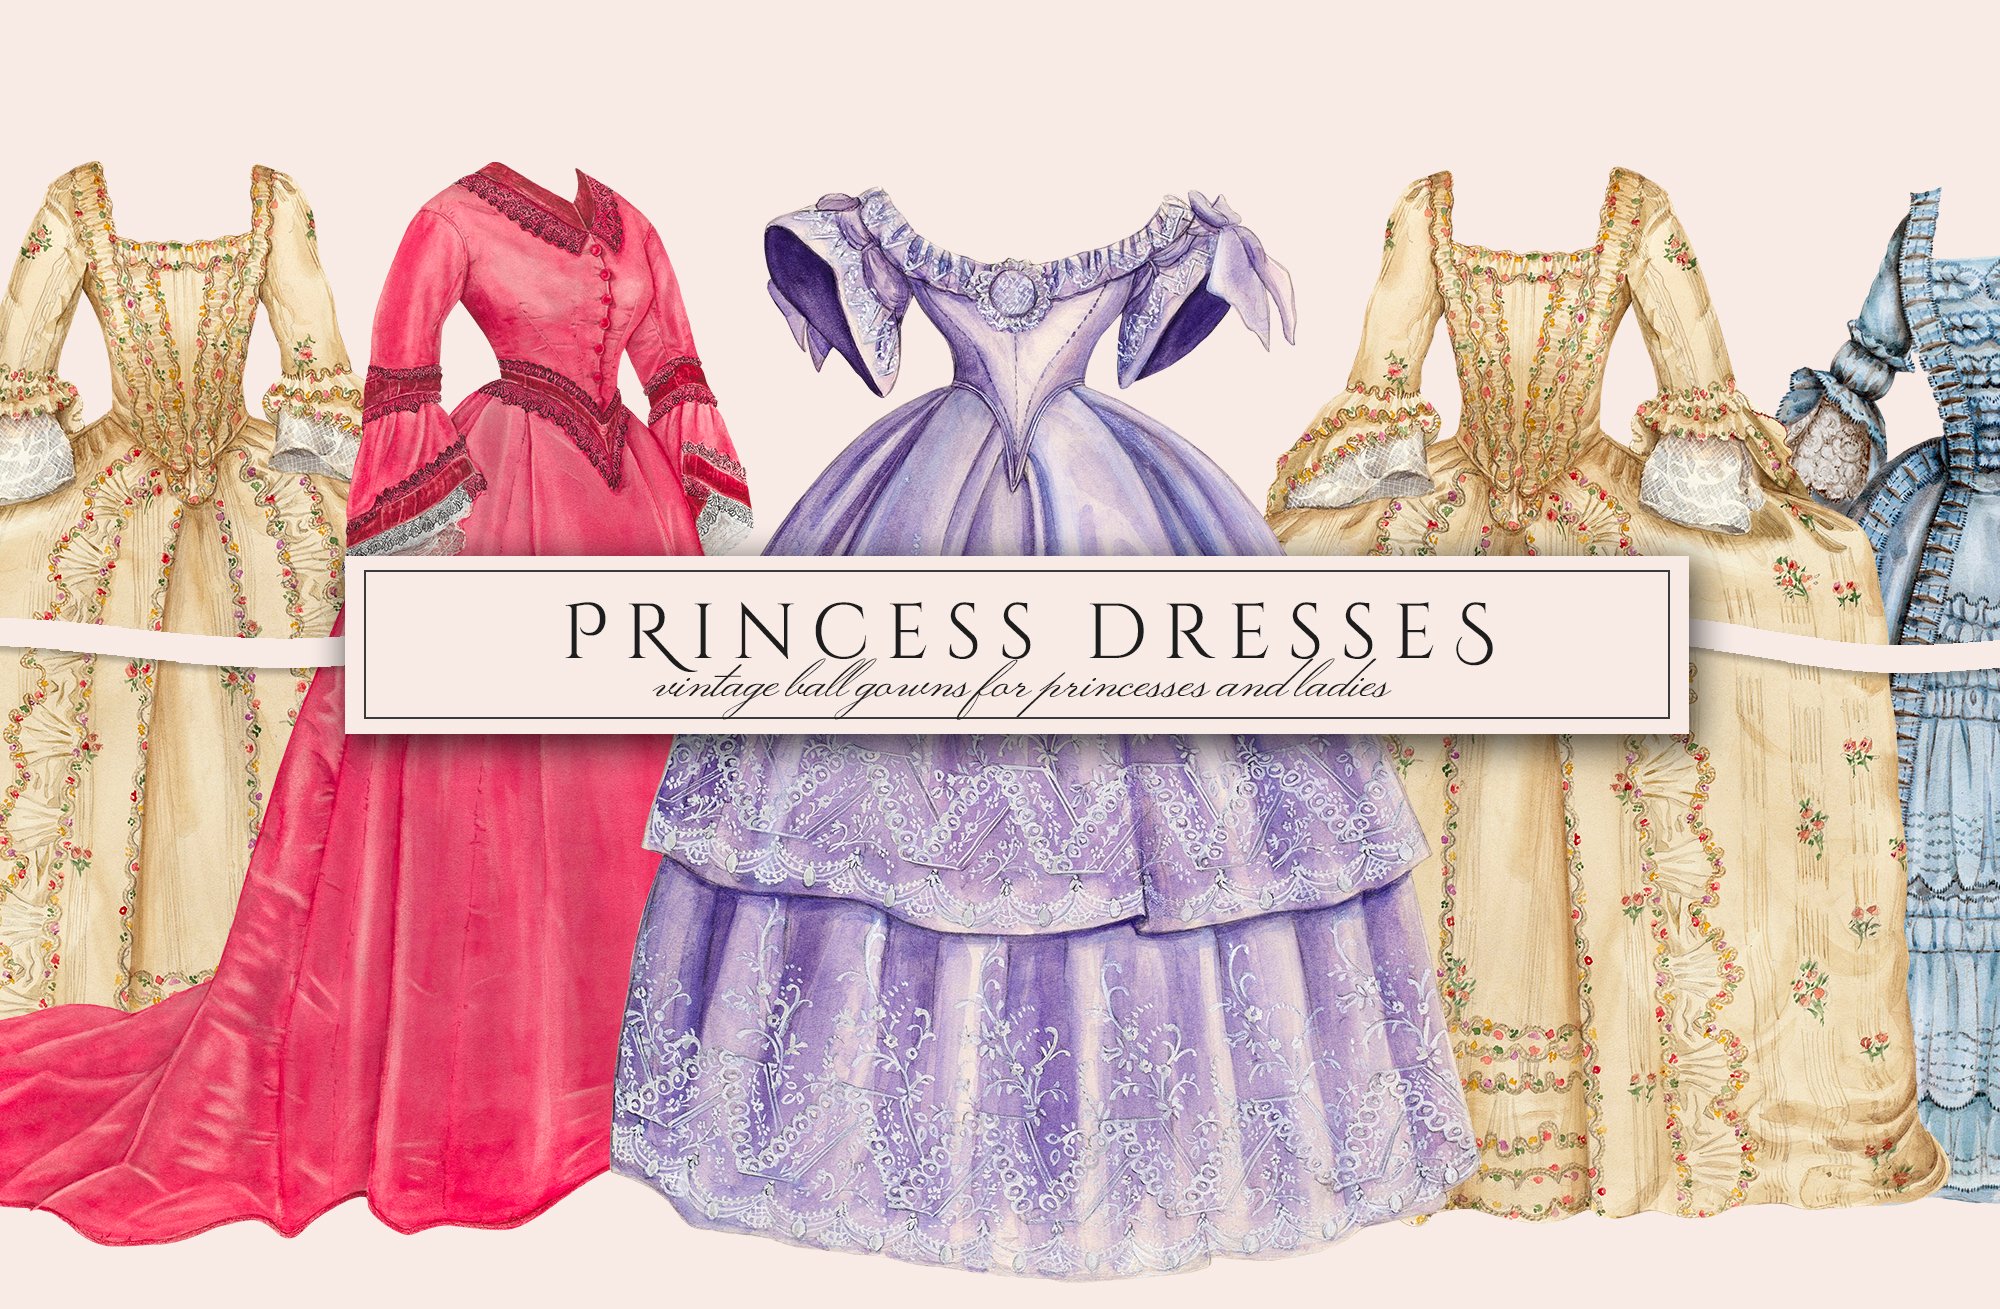 Vintage Princess Dresses Set cover image.